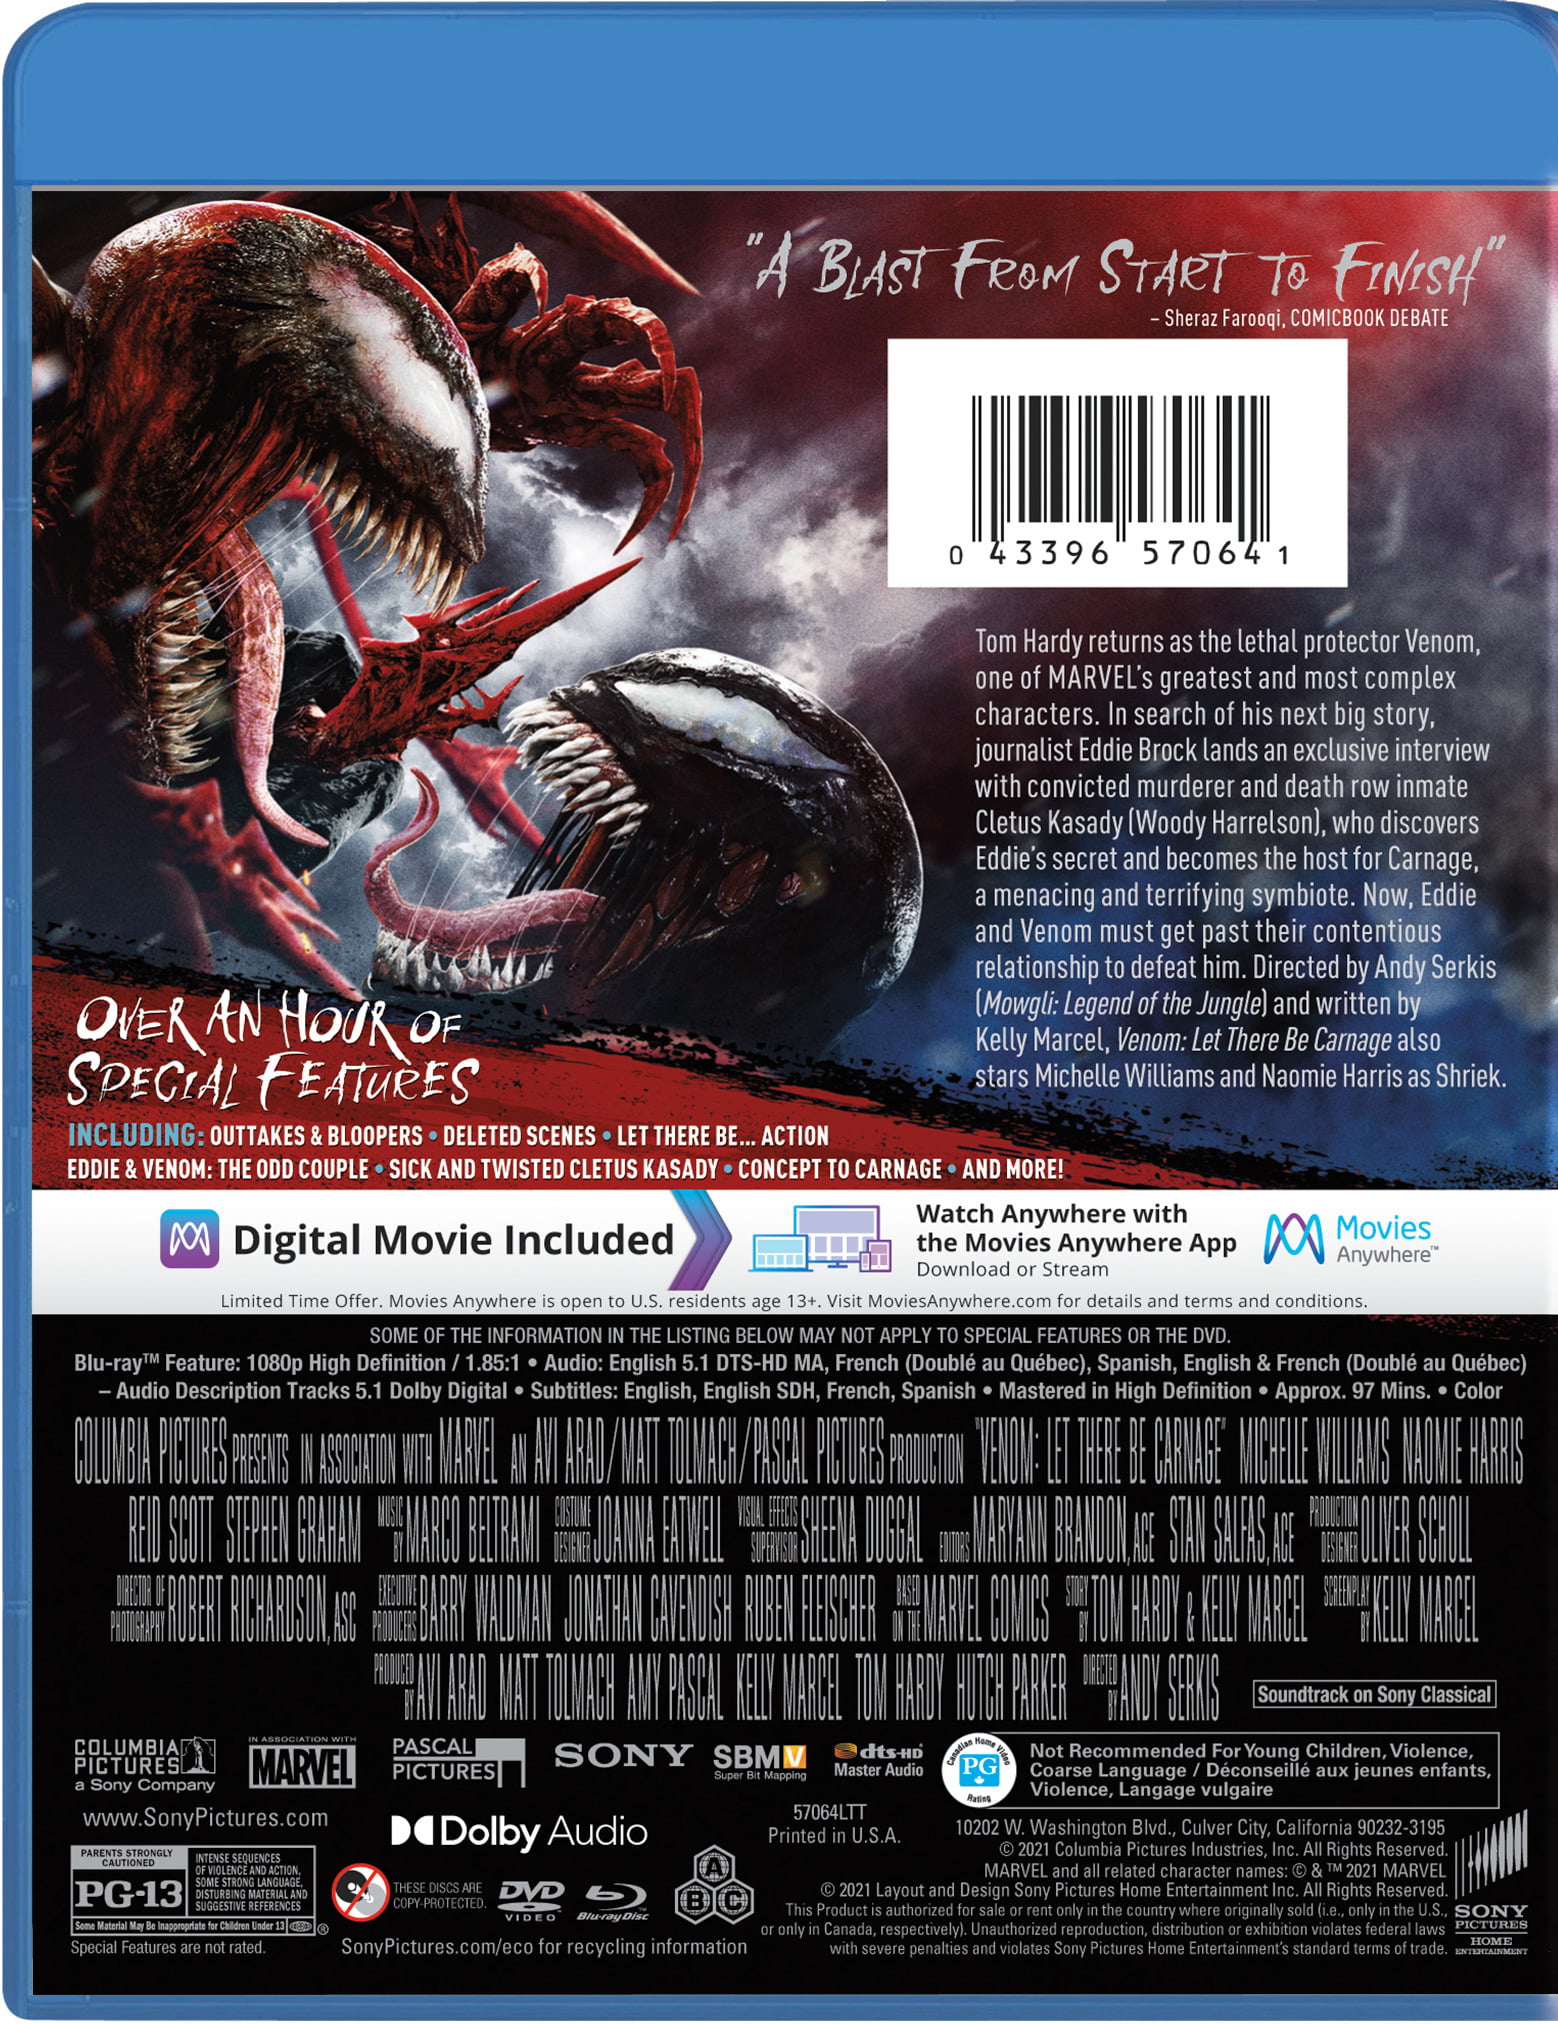 Venom [Includes Digital Copy] [Blu-ray/DVD] [2018] - Best Buy